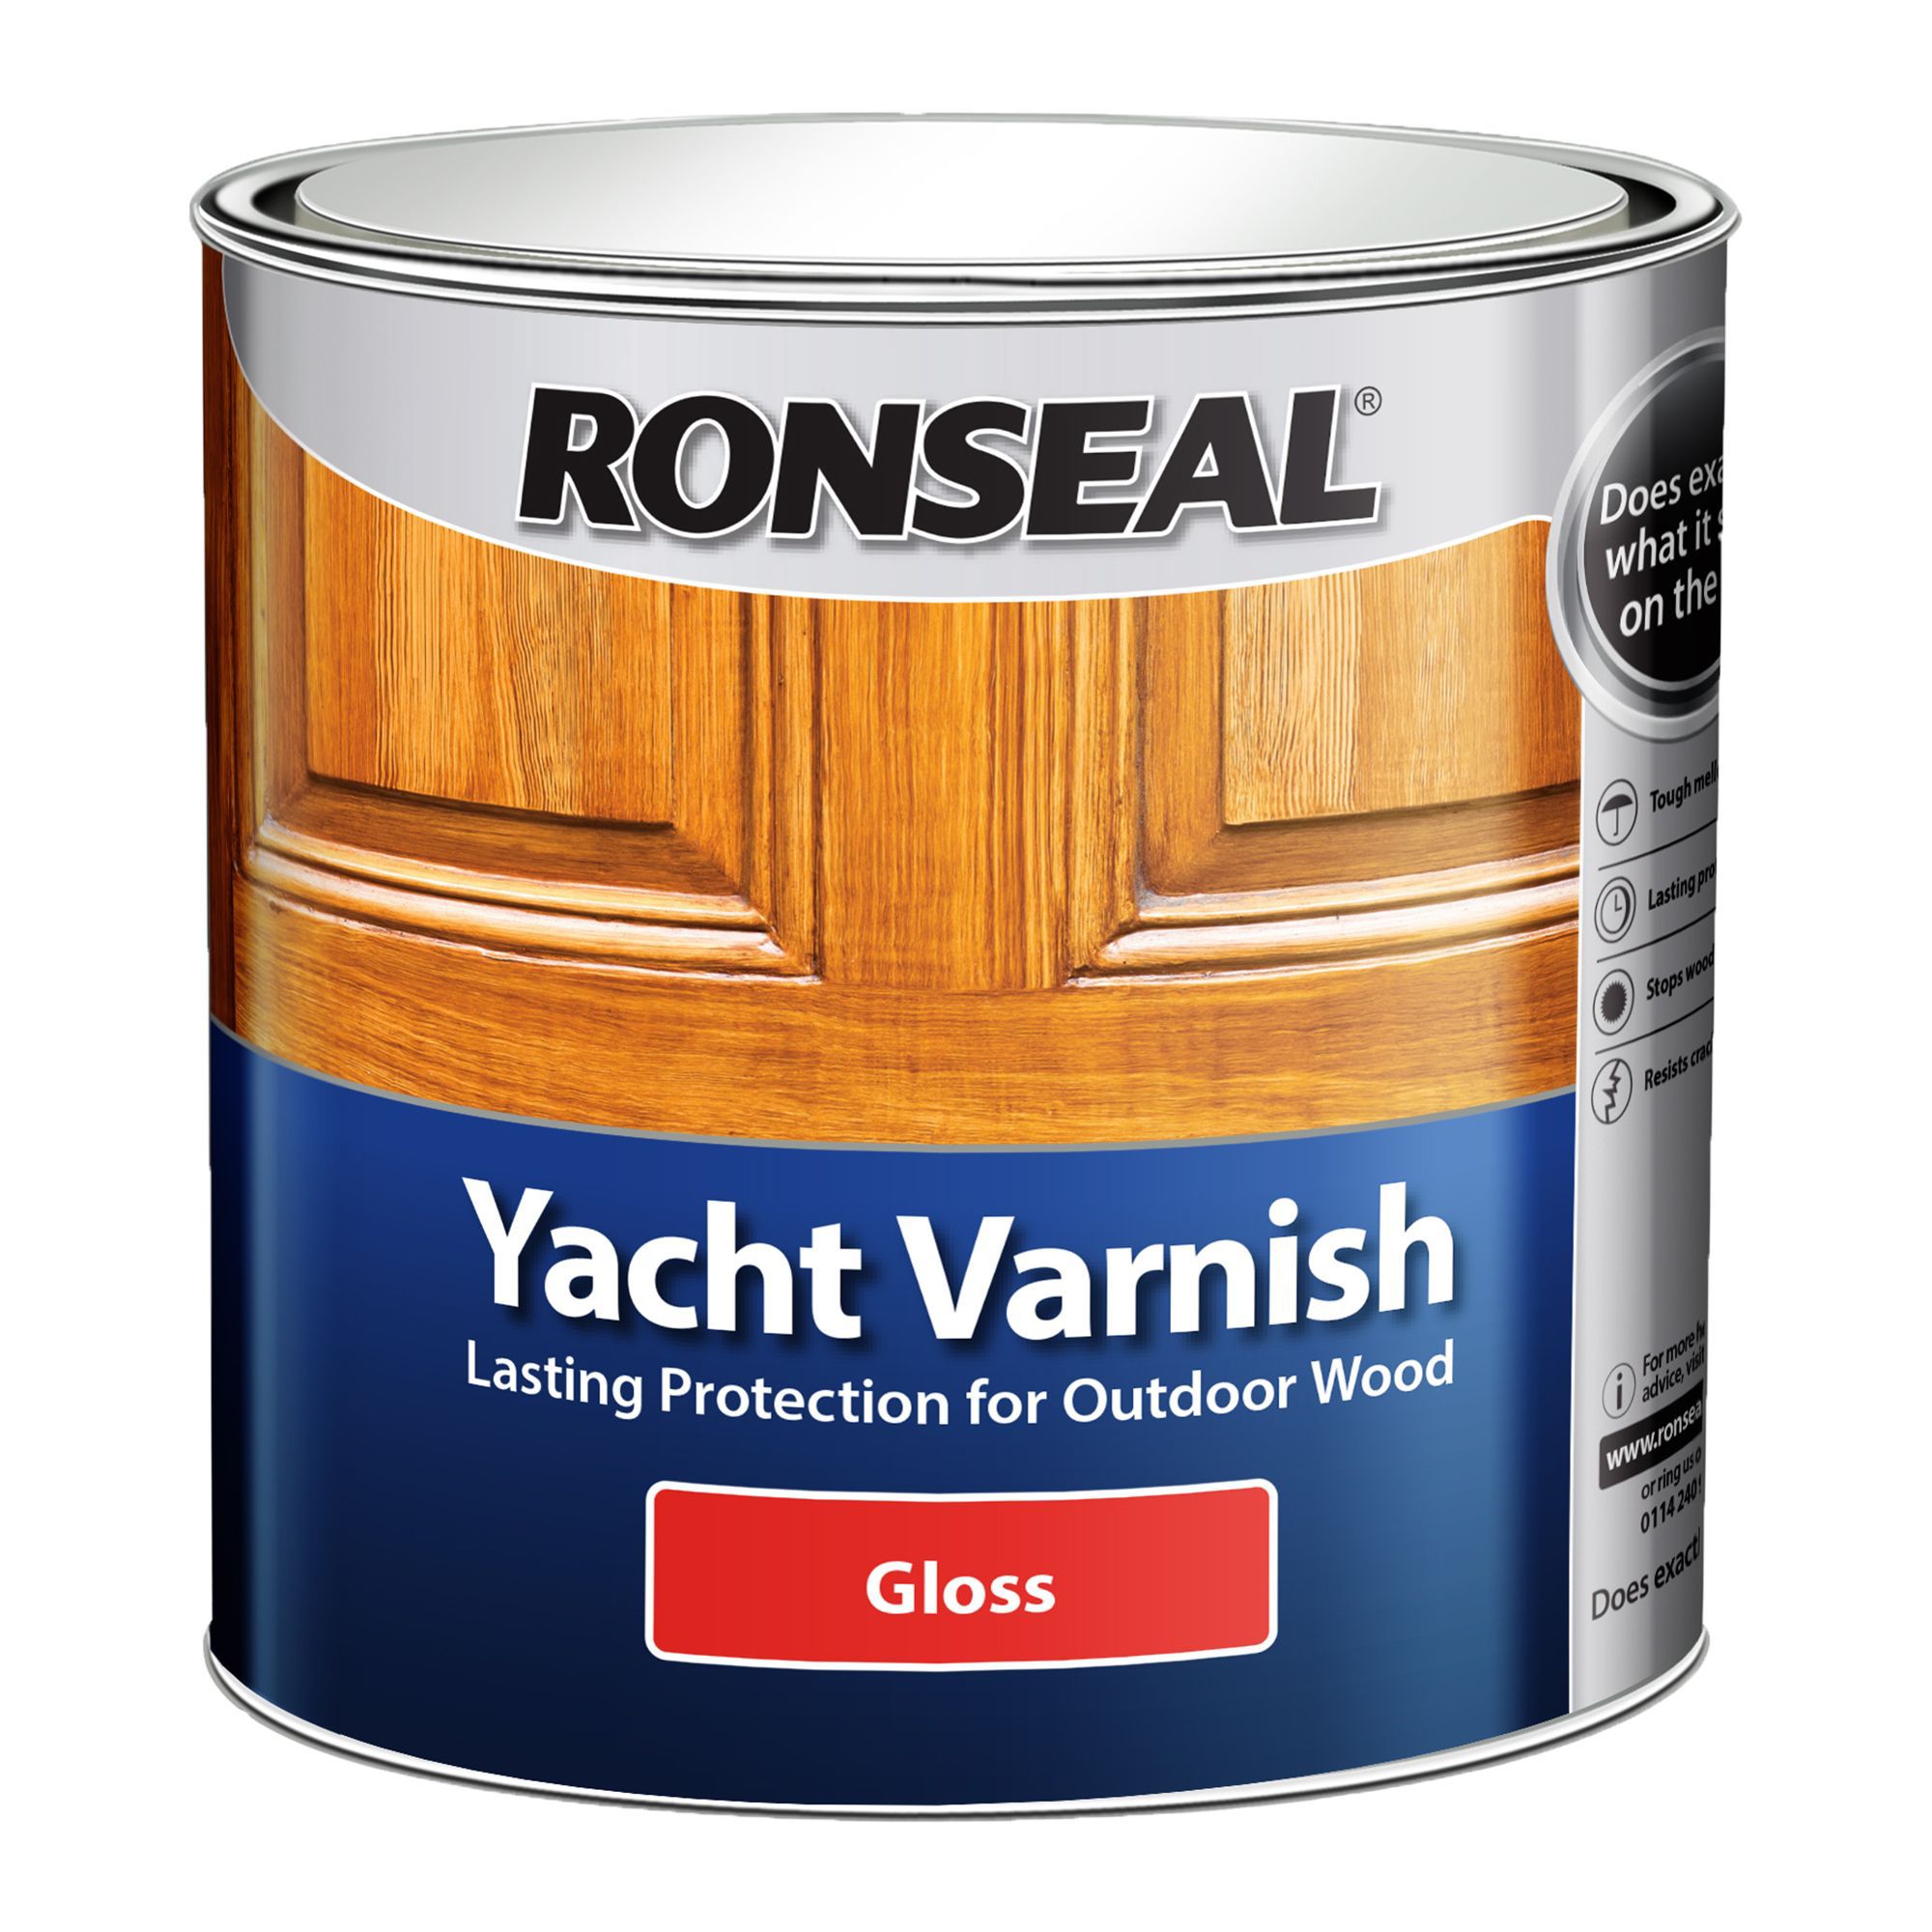 the best yacht varnish